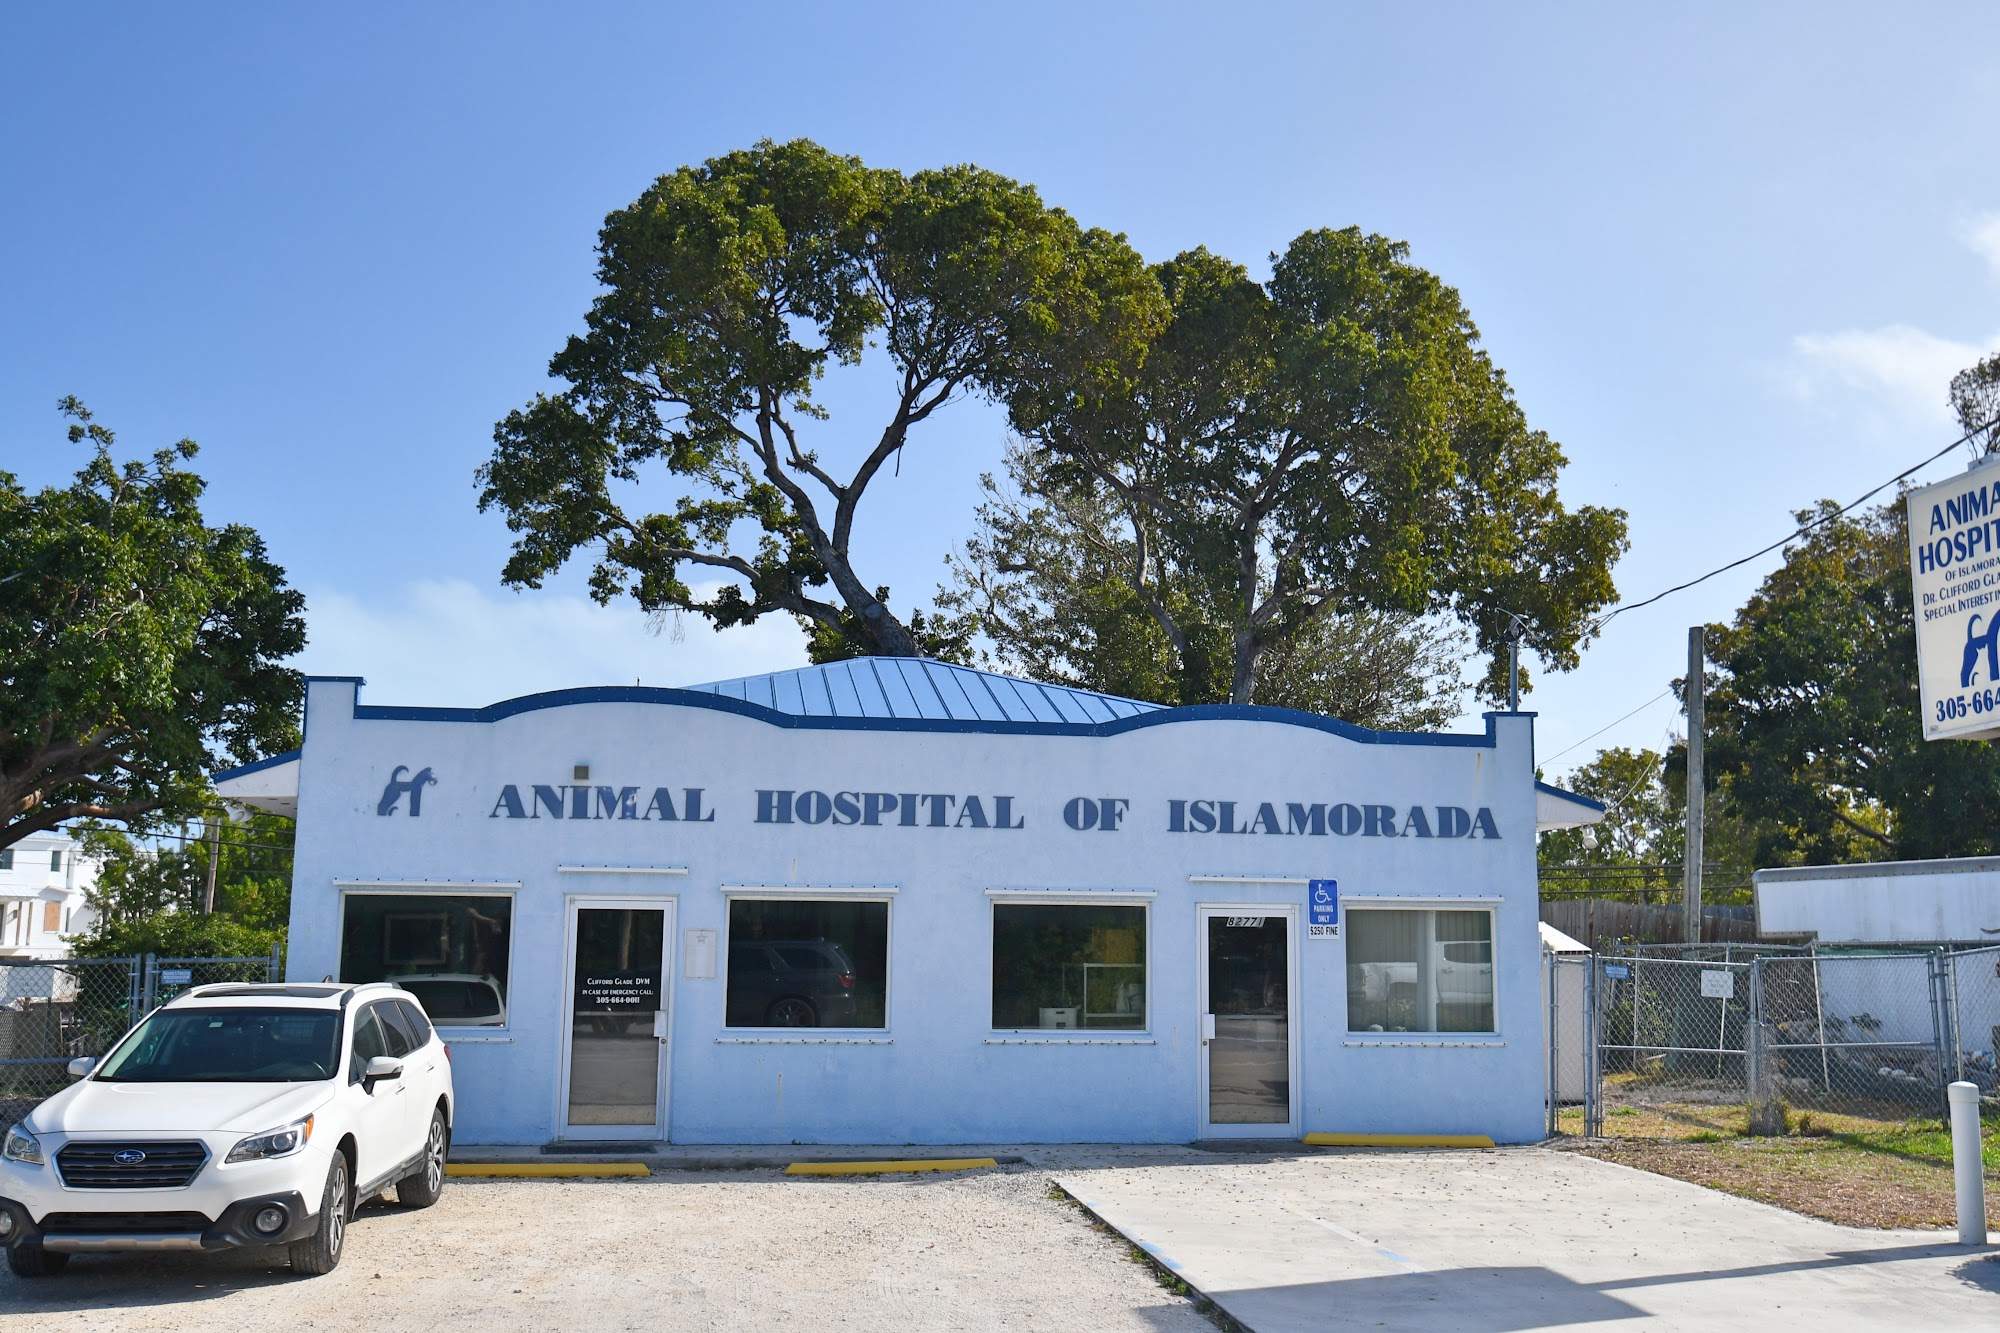 The Animal Hospital of Islamorada